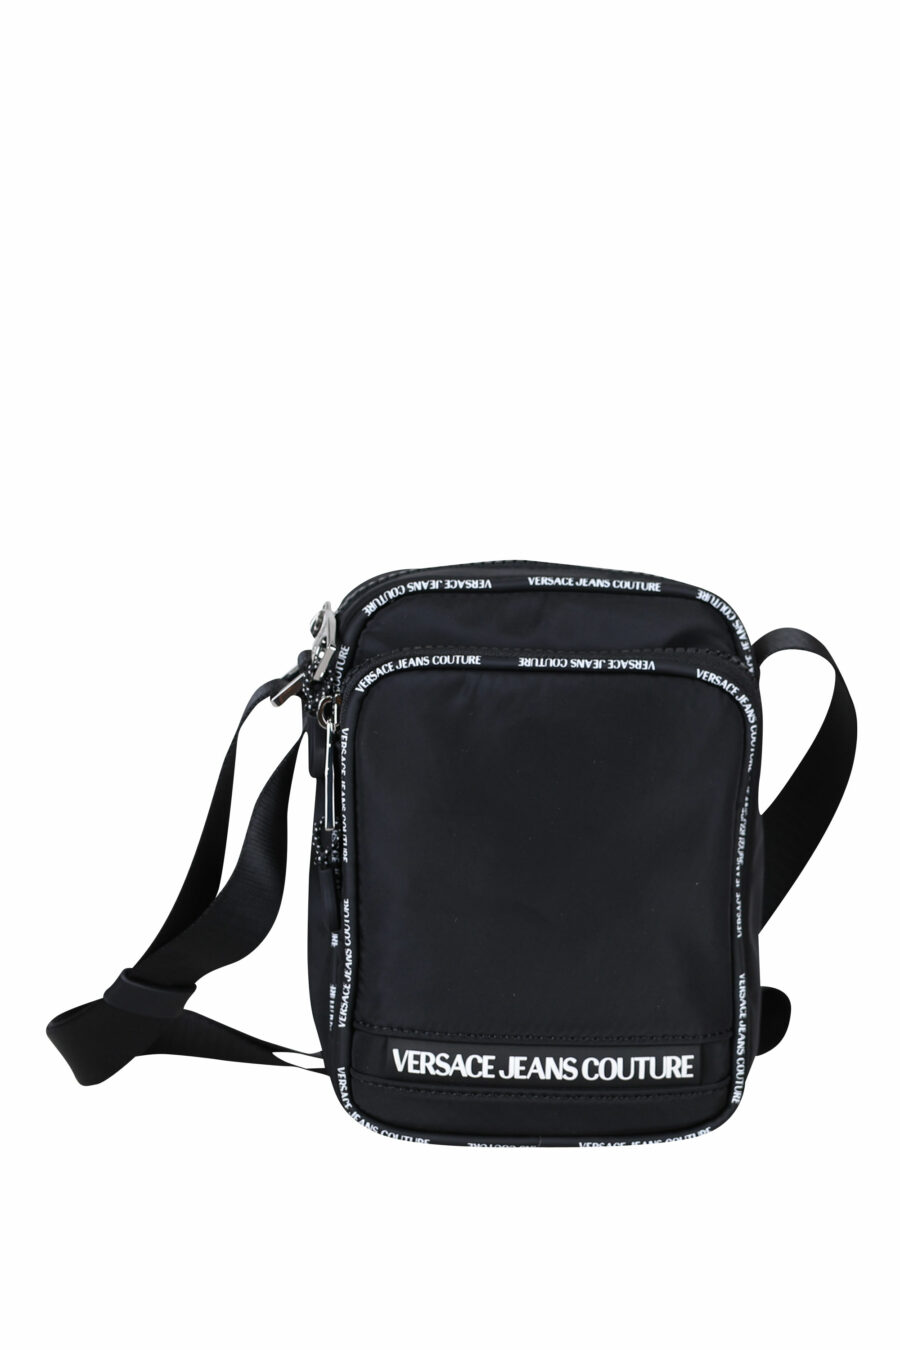 Black crossbody bag with white mini-logo lettering on ribbon - 8052019409307